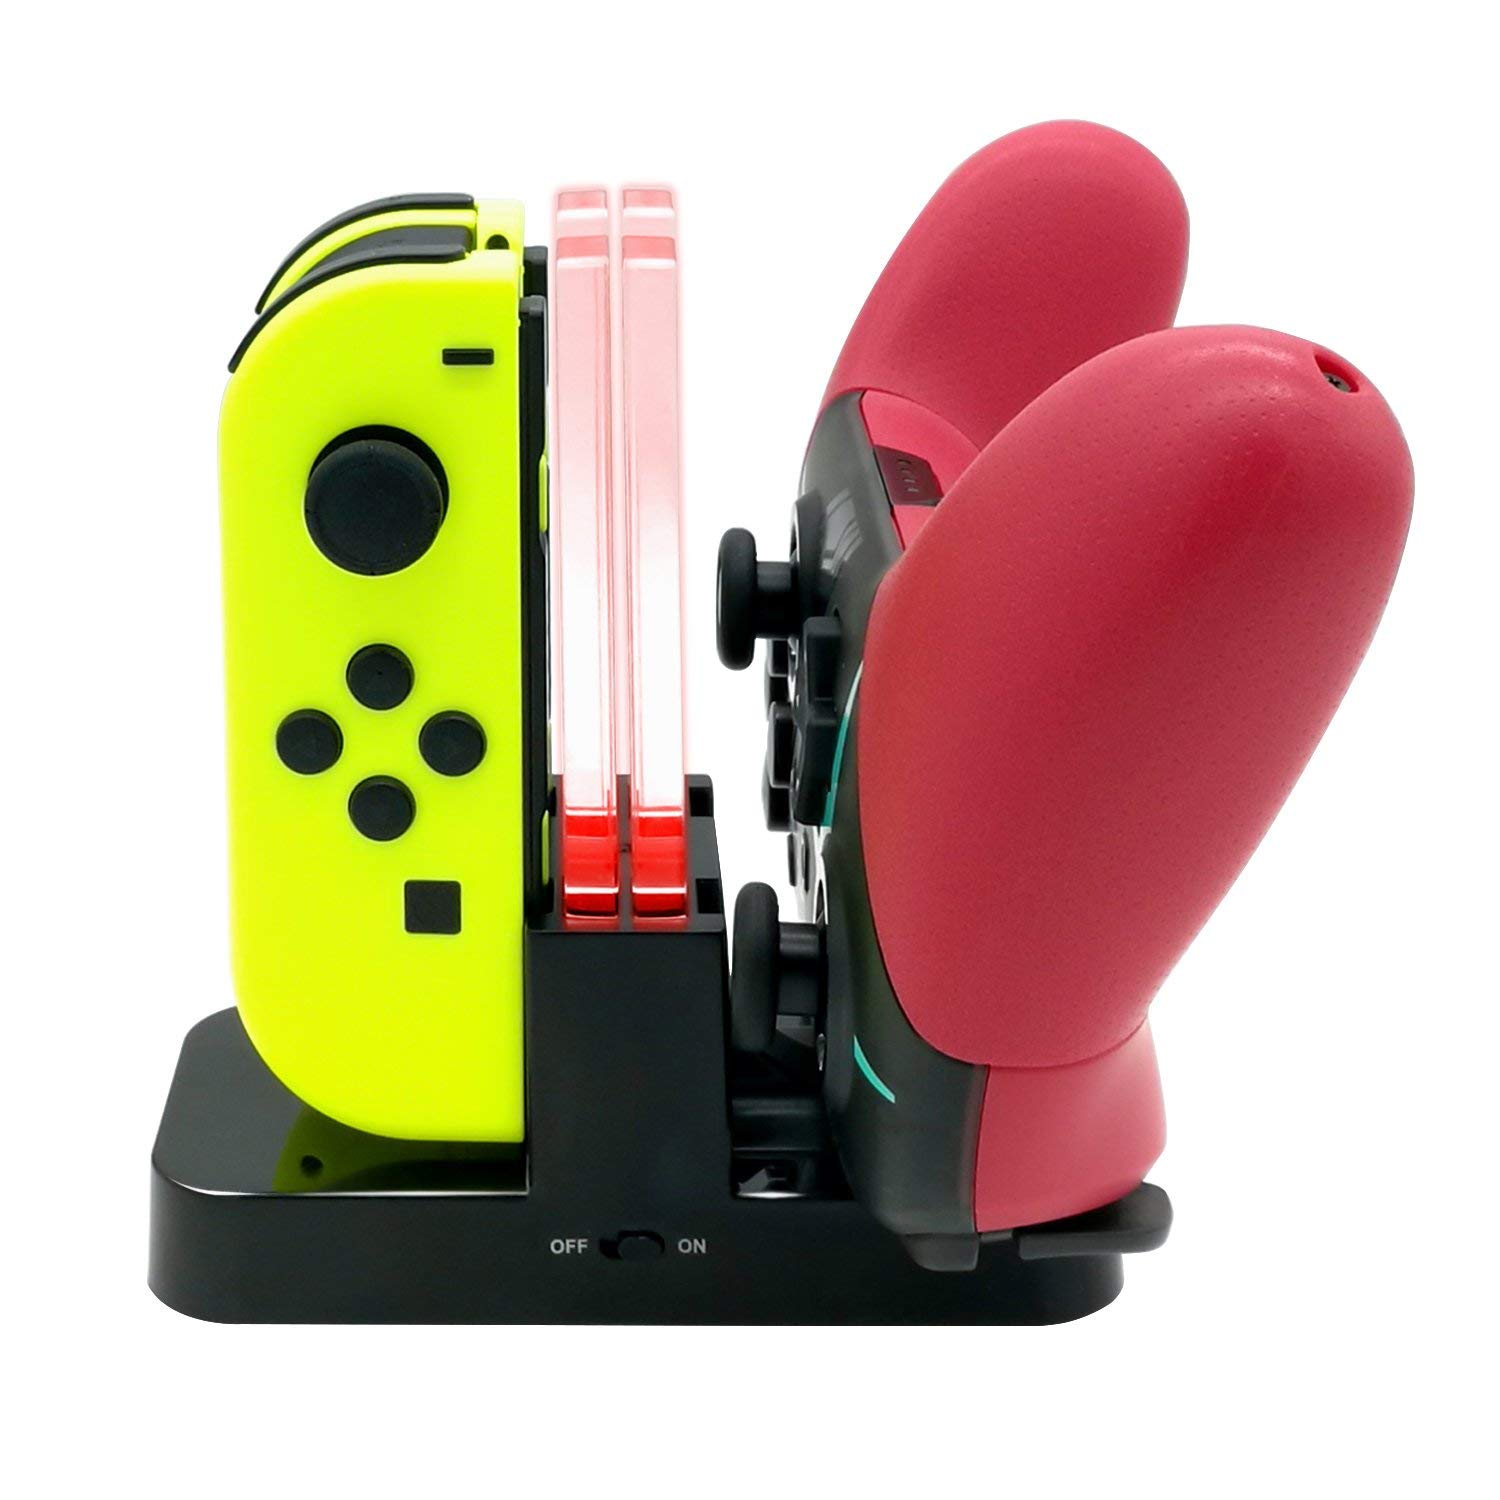 navor Controller Dock Stand - Joy-Con Charger Dock For Nintendo